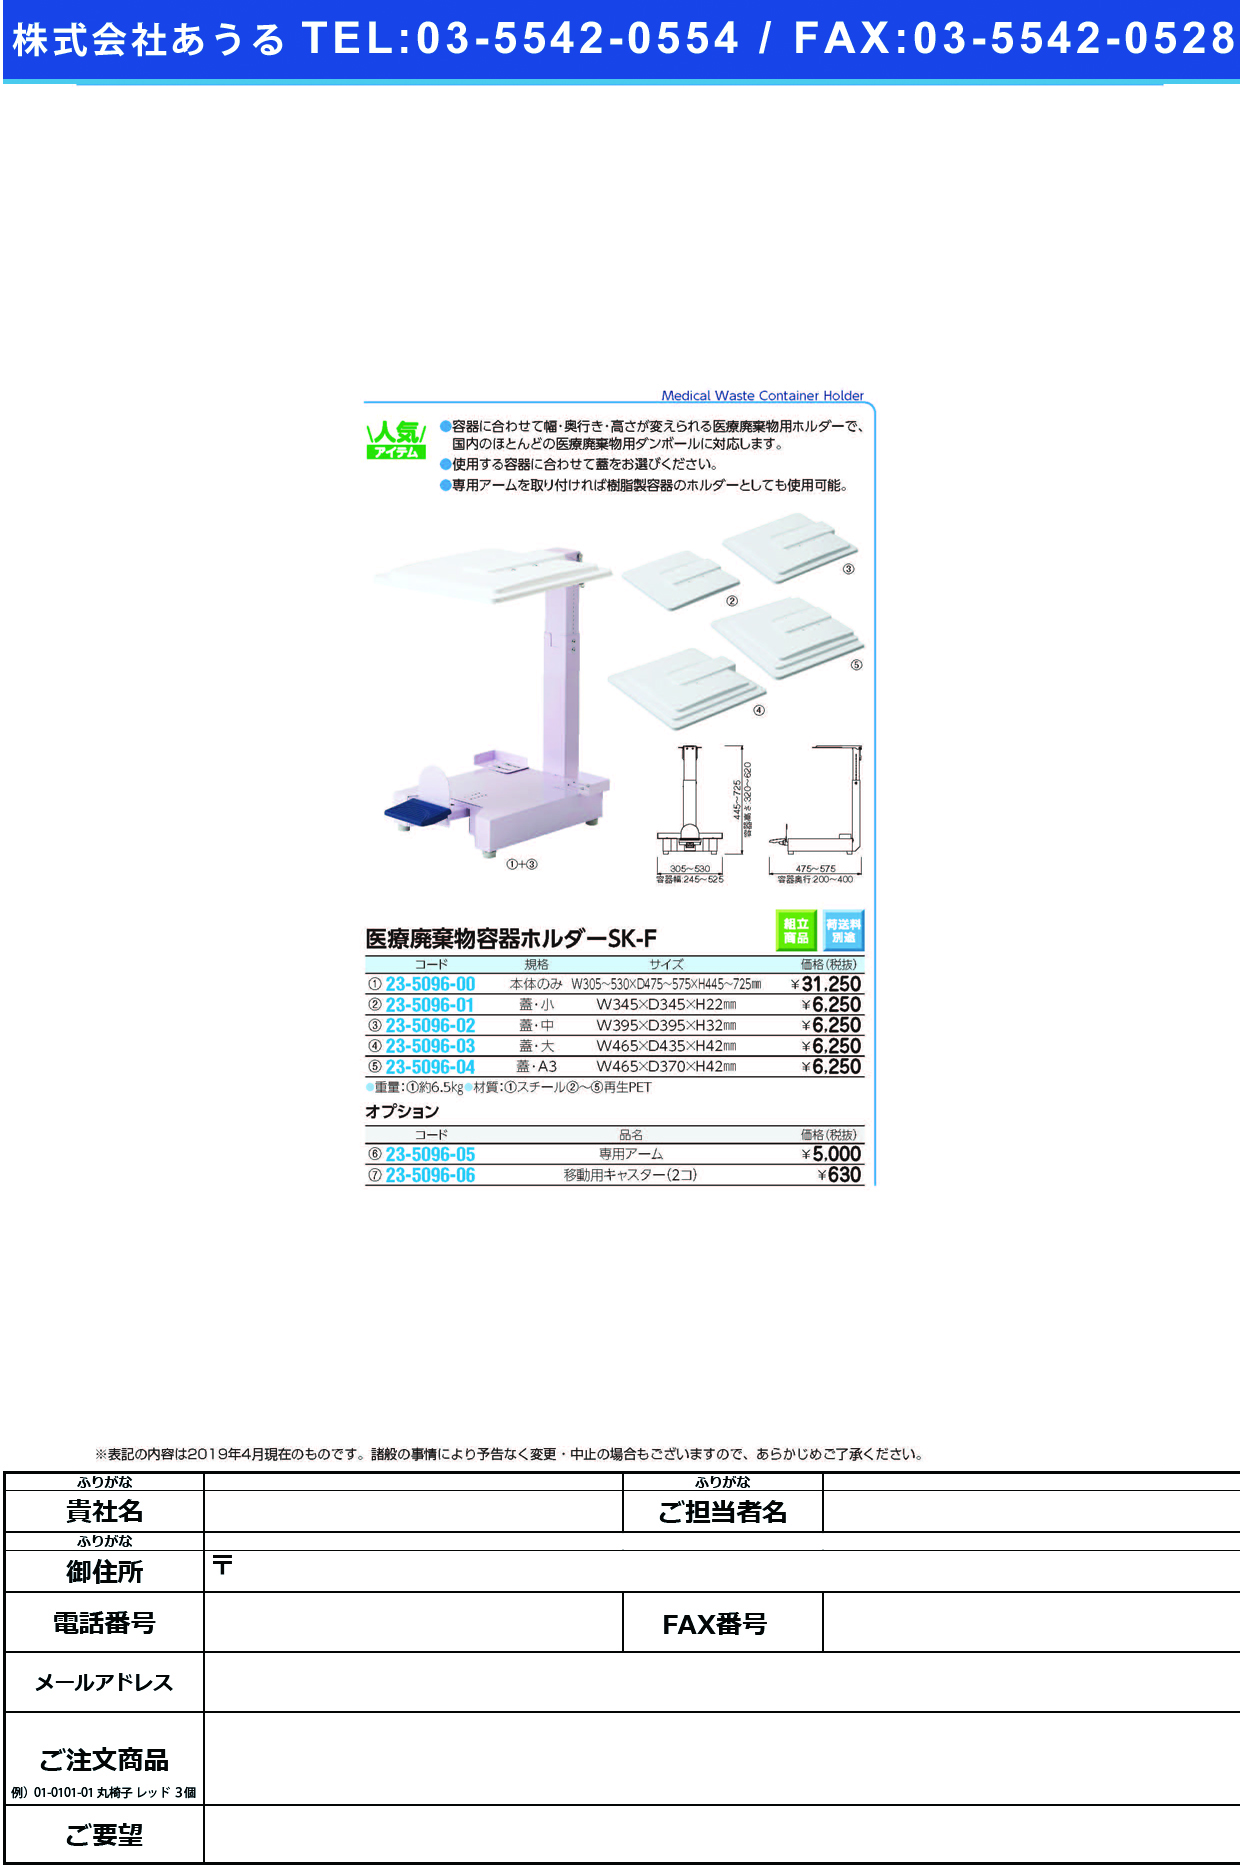 (23-5096-05)医療廃棄物ホルダーＳＫ−Ｆアーム YD-146L-OP5 ｲﾘｮｳﾊｲｷﾌﾞﾂﾎﾙﾀﾞｰｱｰﾑ(山崎産業)【1個単位】【2019年カタログ商品】